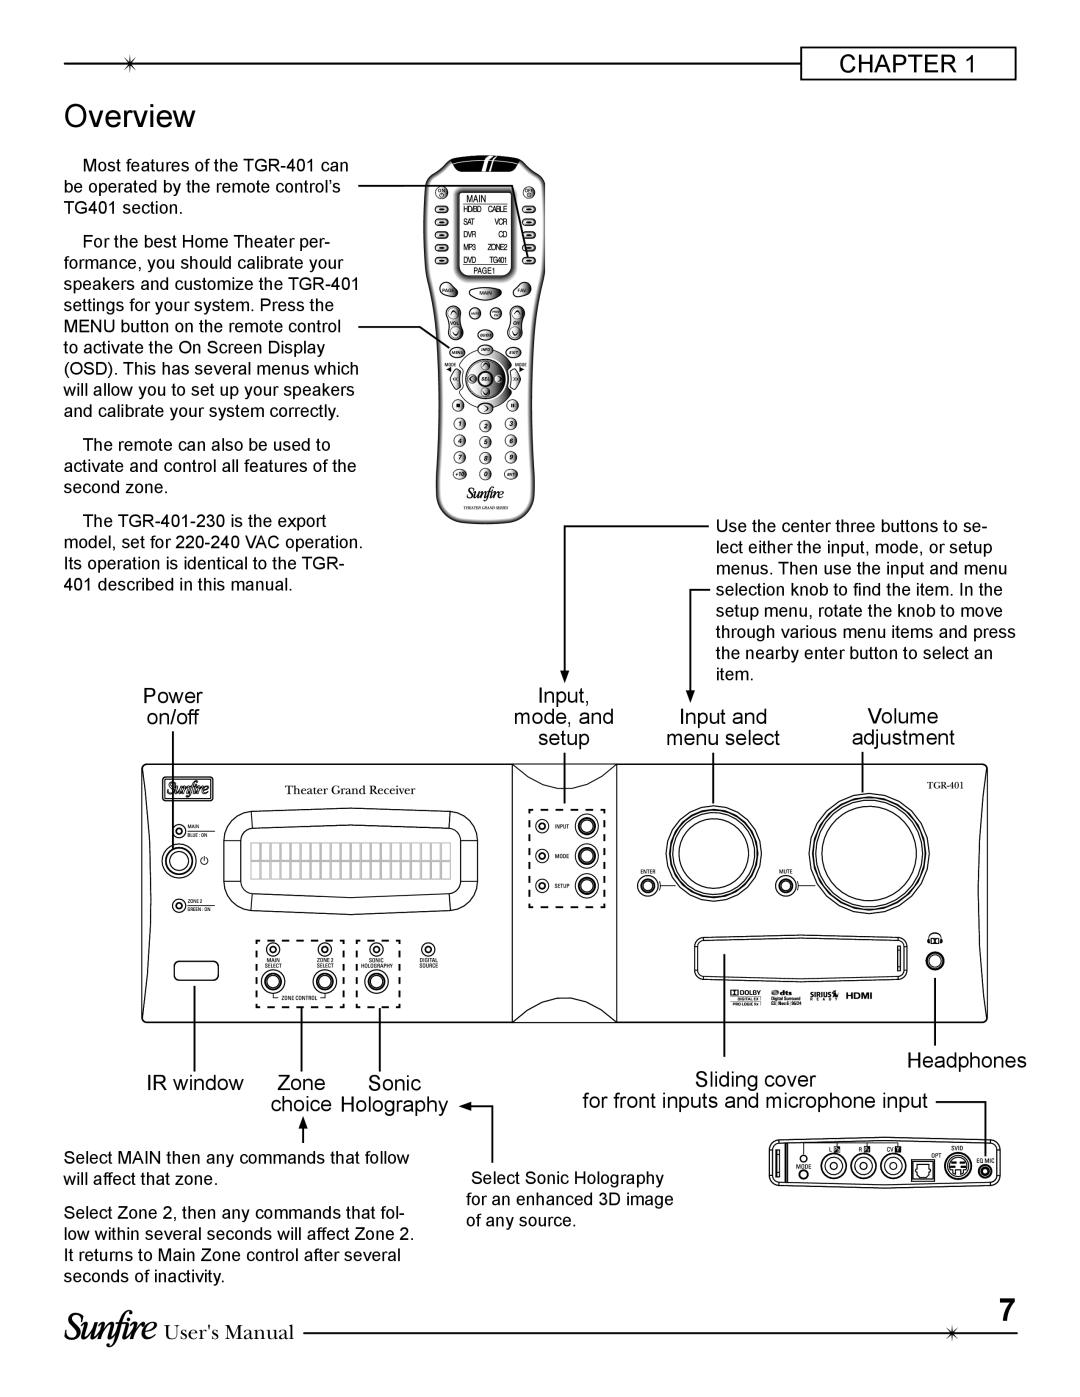 Sunfire TGR-401-230 manual Overview 